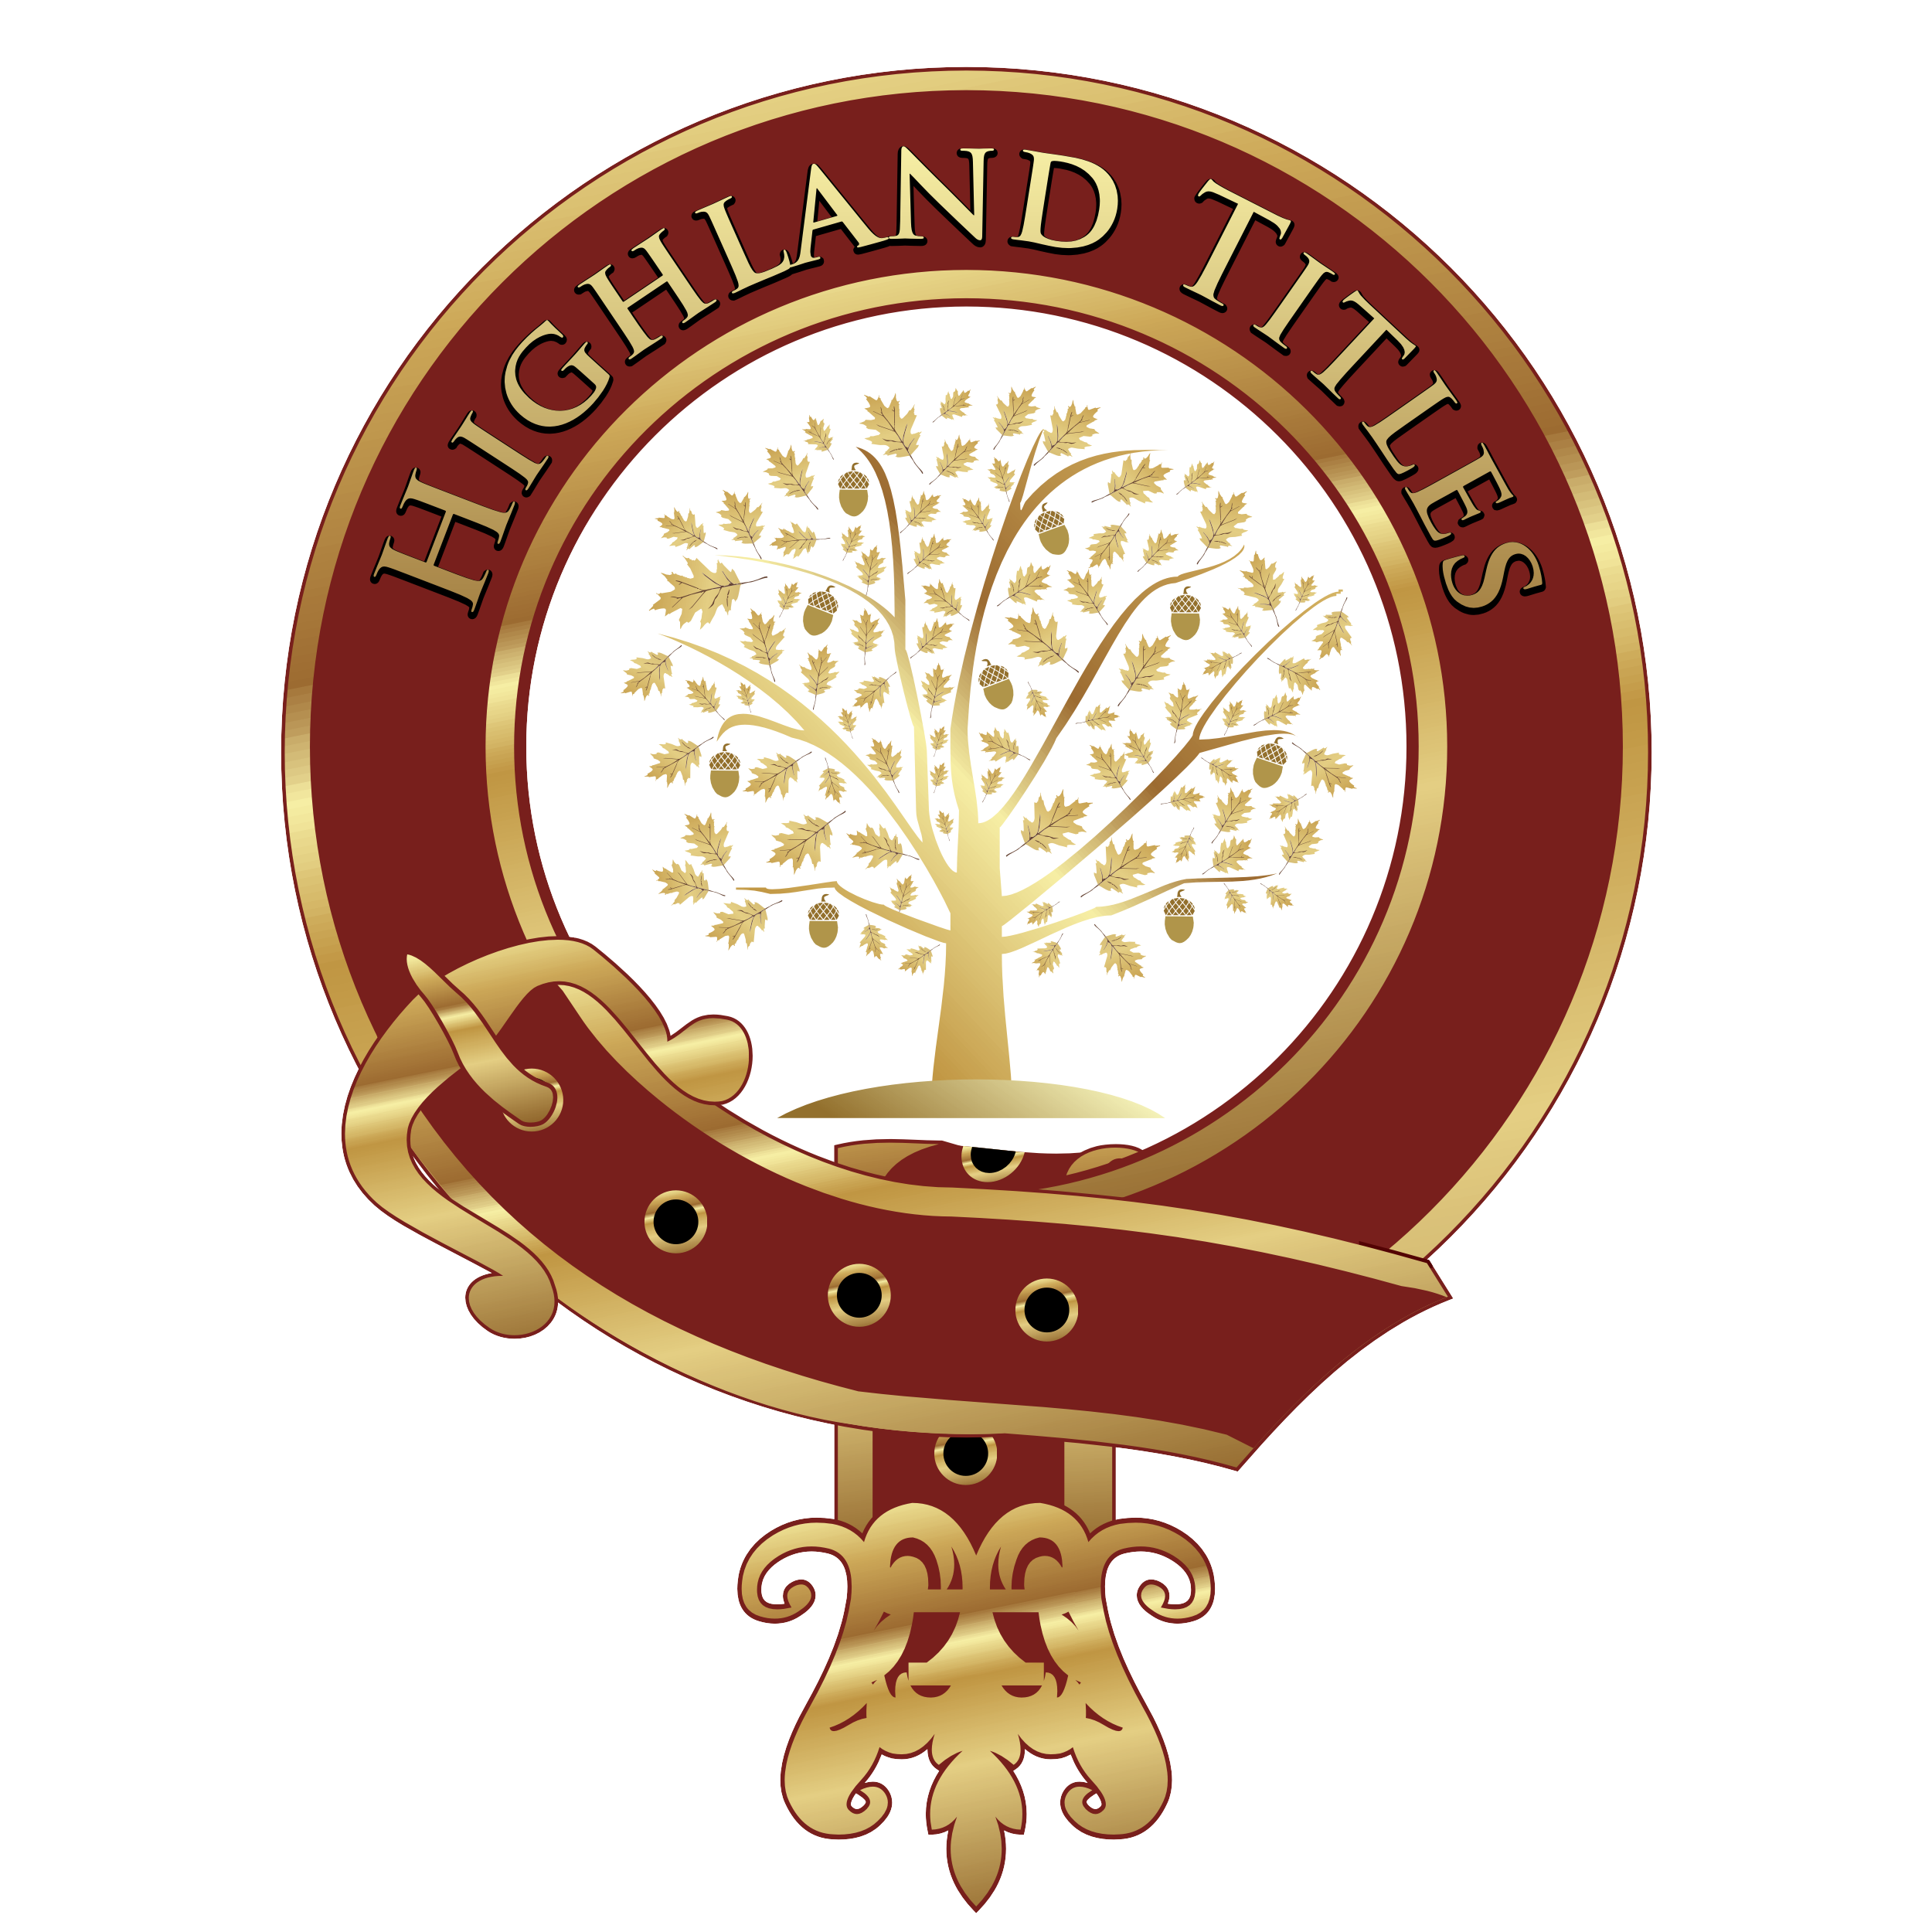 Highland Titles